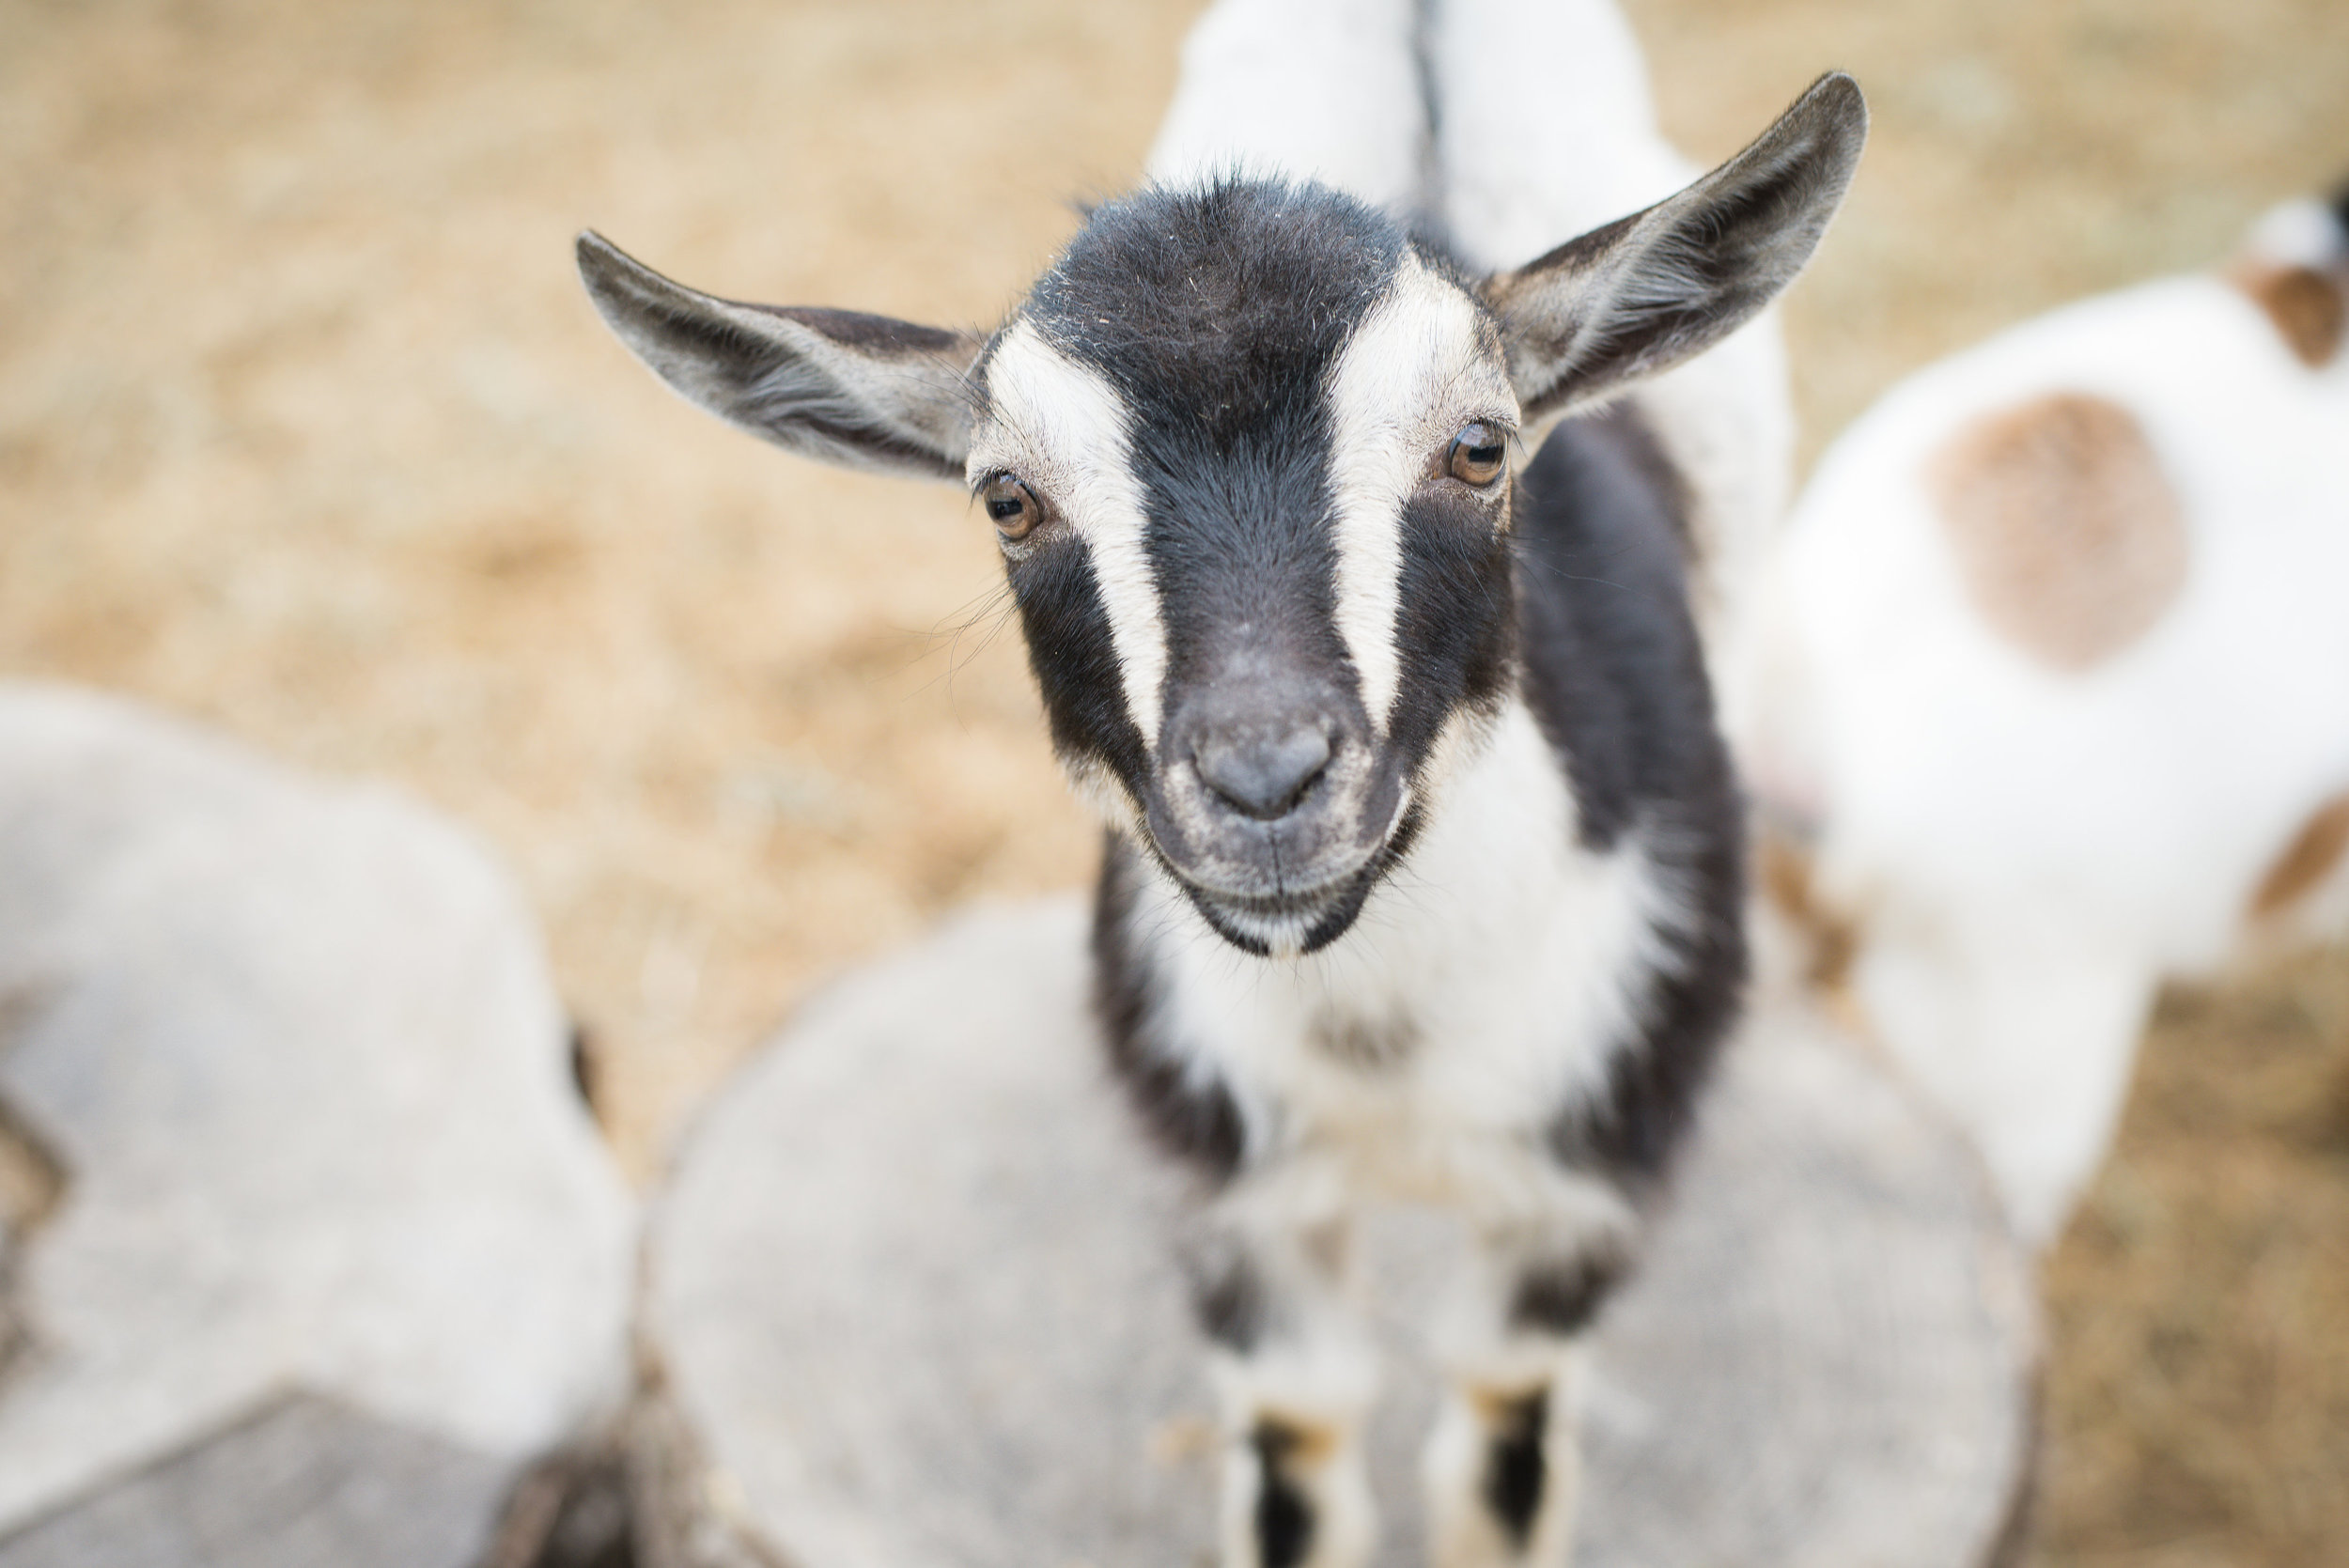 Farm Fresh Goat Milk Soap, Straight from Your Homestead! – Honey Down Farm